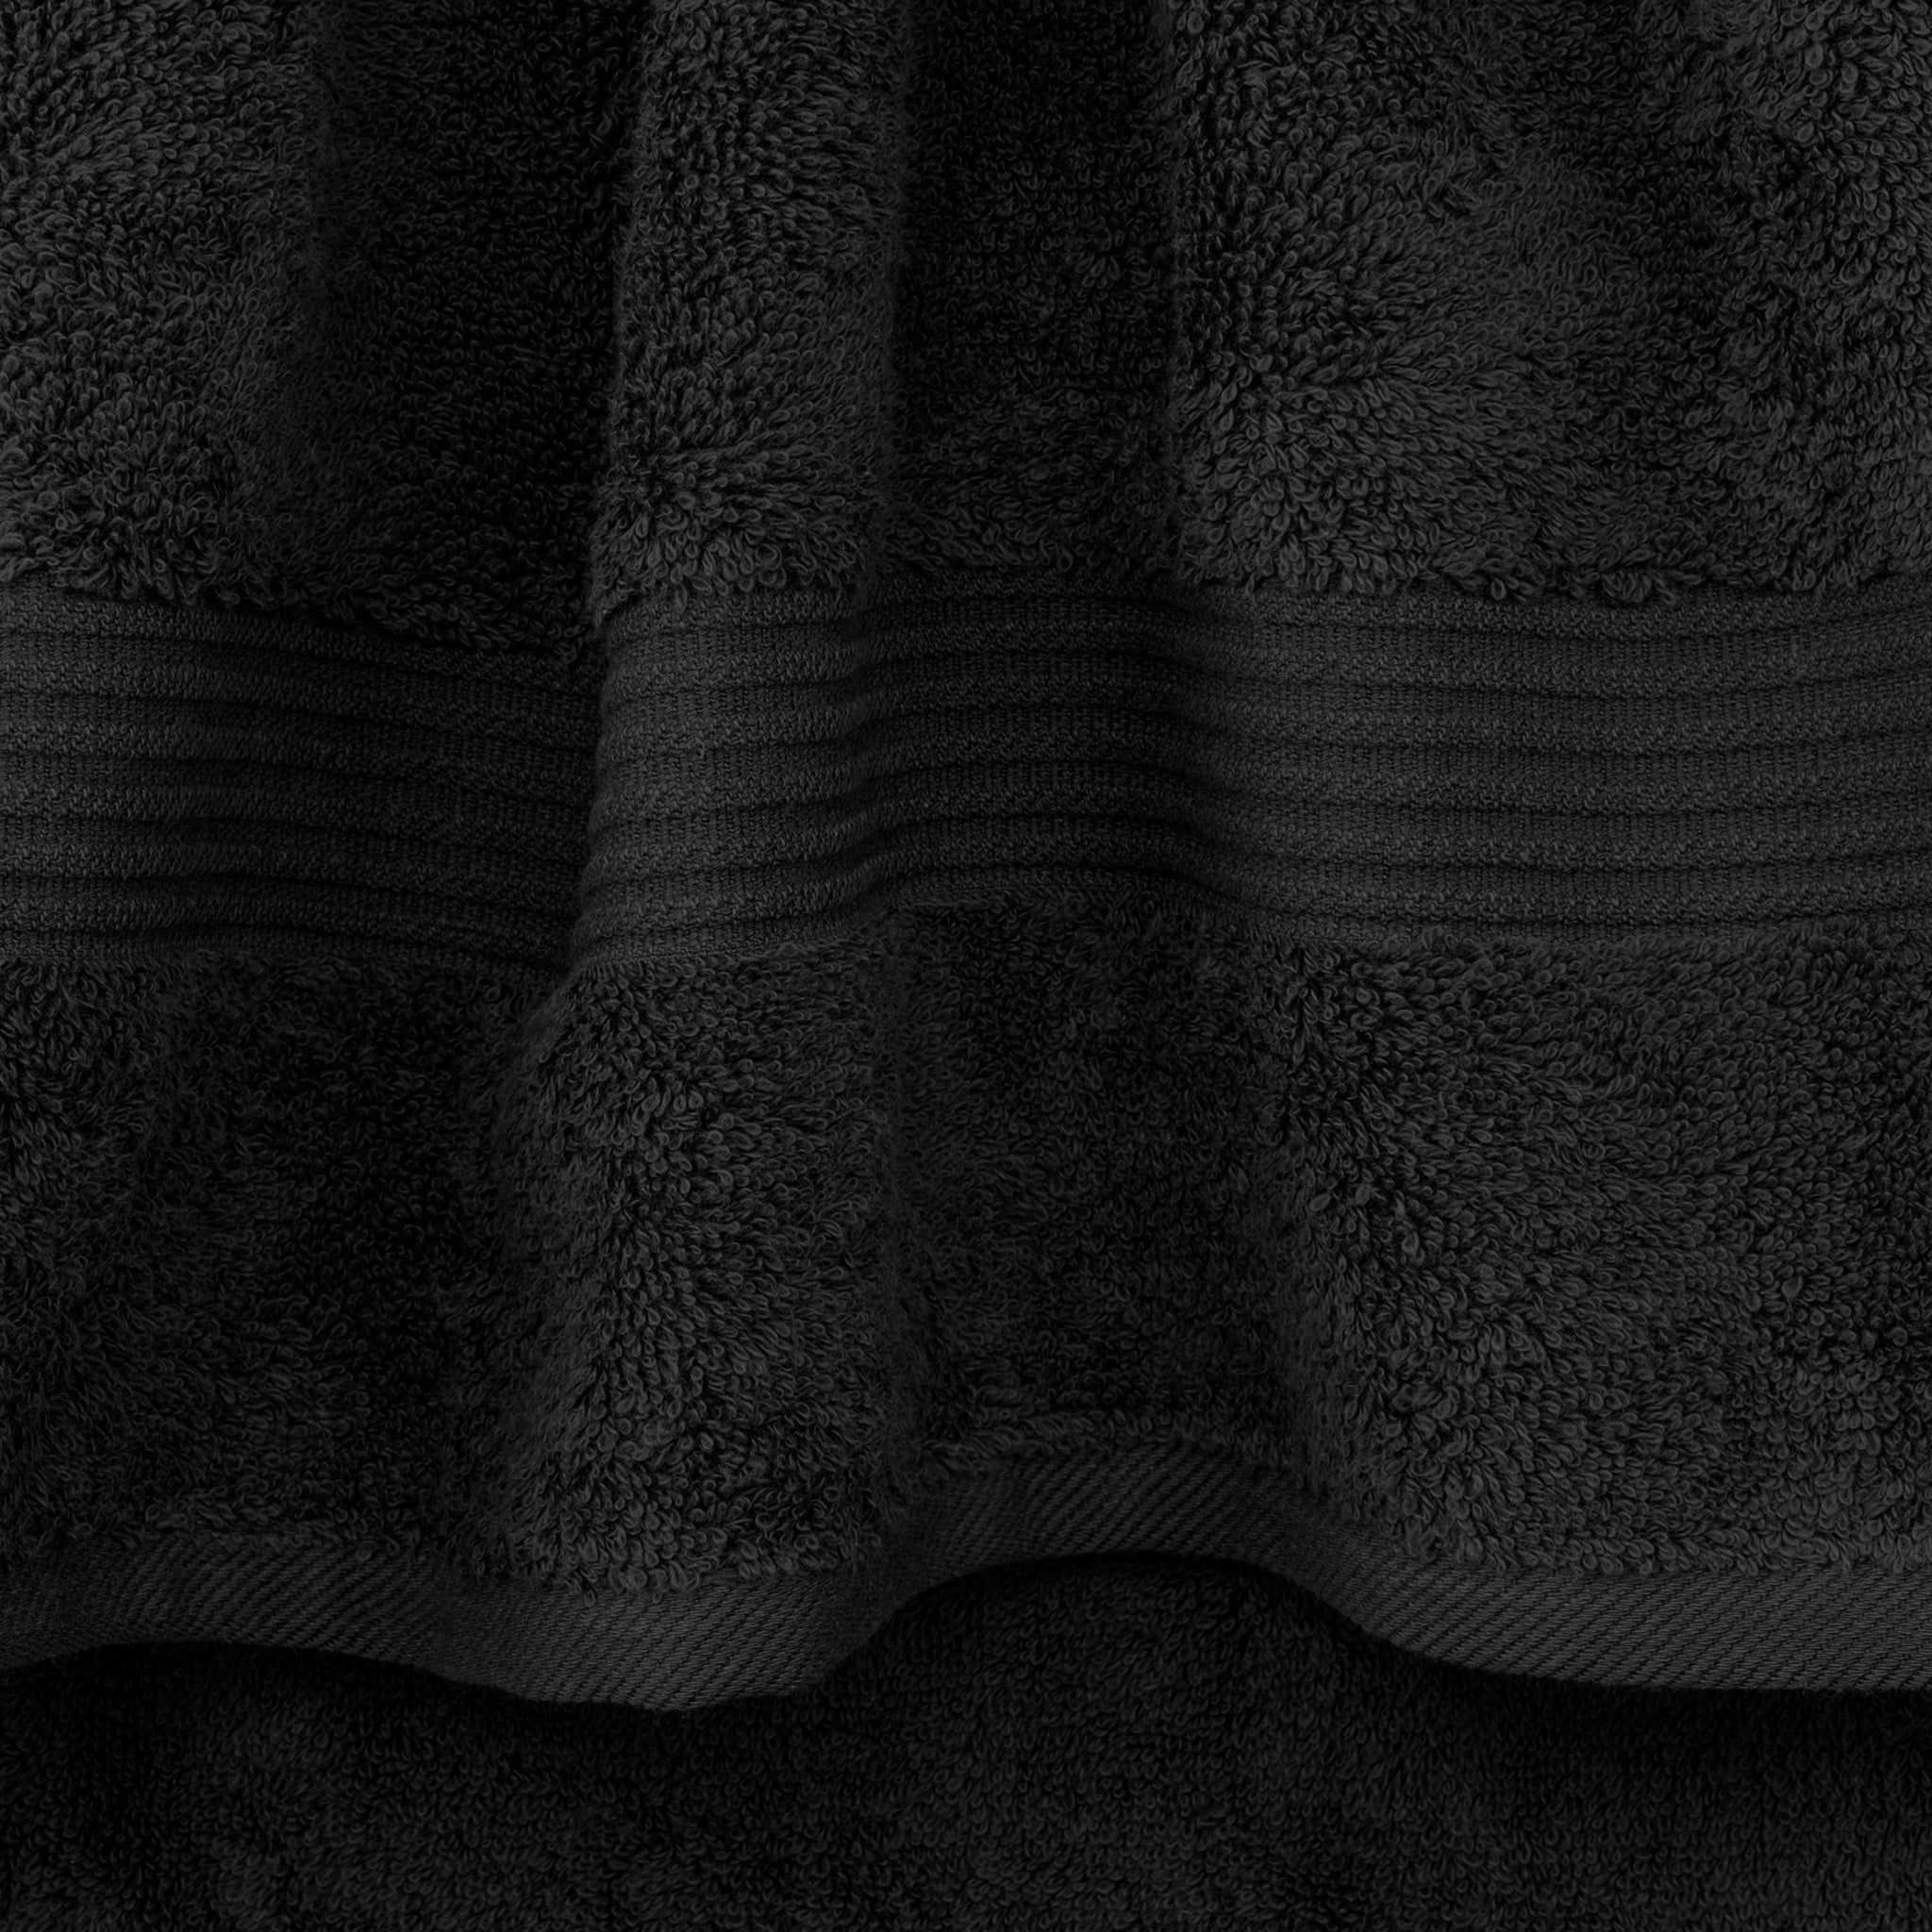 American Soft Linen Bekos 100% Cotton Turkish Towels, 4 Piece Washcloth Towel Set -black-04